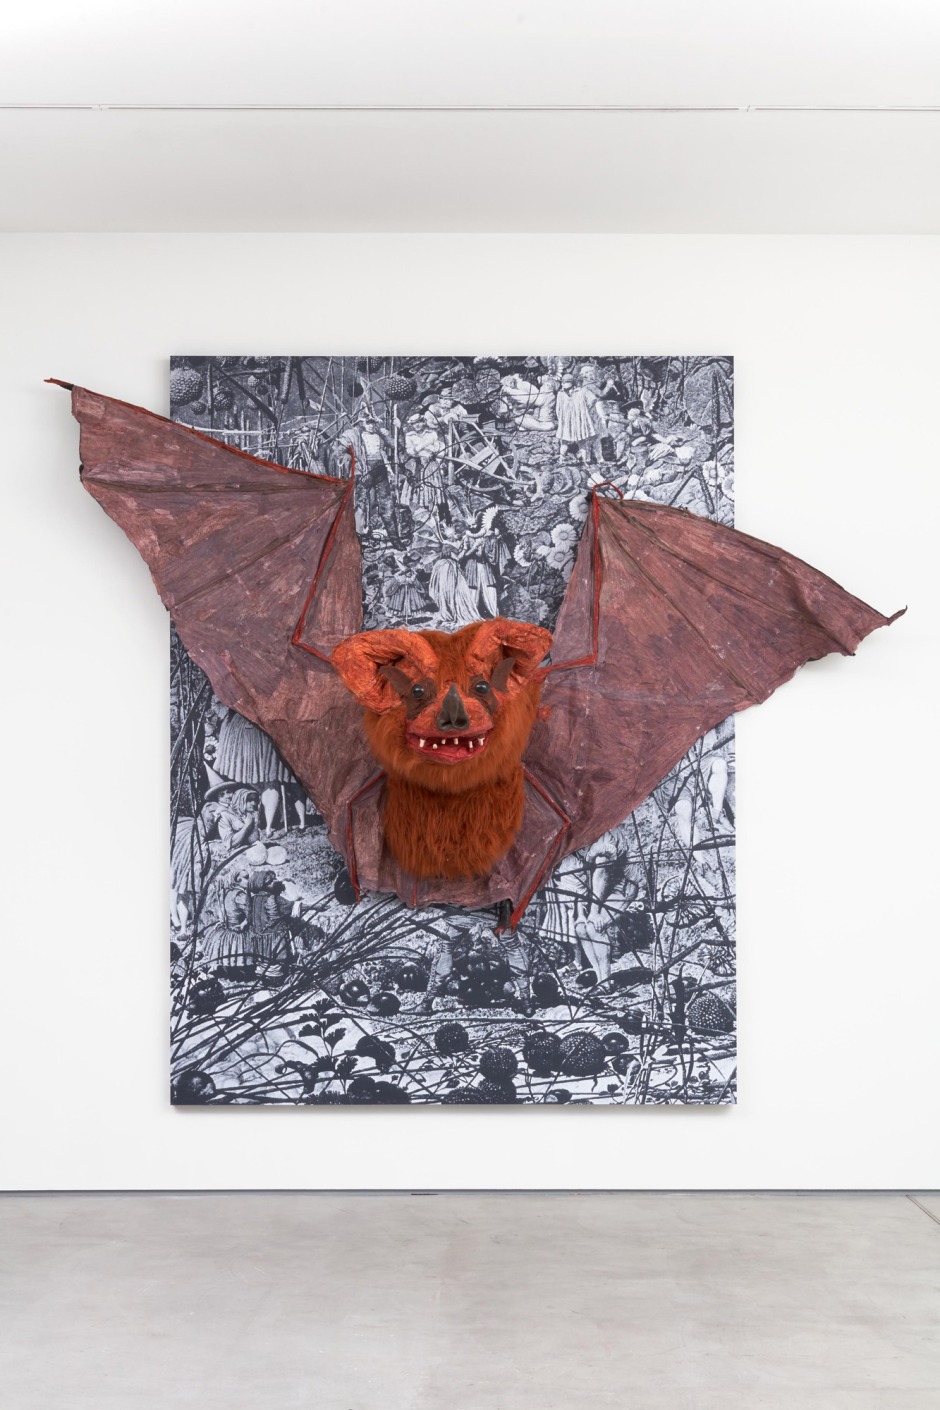 Marvin Gaye Chetwynd  Bat, 2018  photocopies, wood, latex, fabric, paint  280 x 319 x 106 cm / 110 ¼ x 125 ⅝ x 41 ¾ in  © Monster Chetwynd. Courtesy the Artist and Sadie Coles HQ, London.  Photo: Robert Glowacki